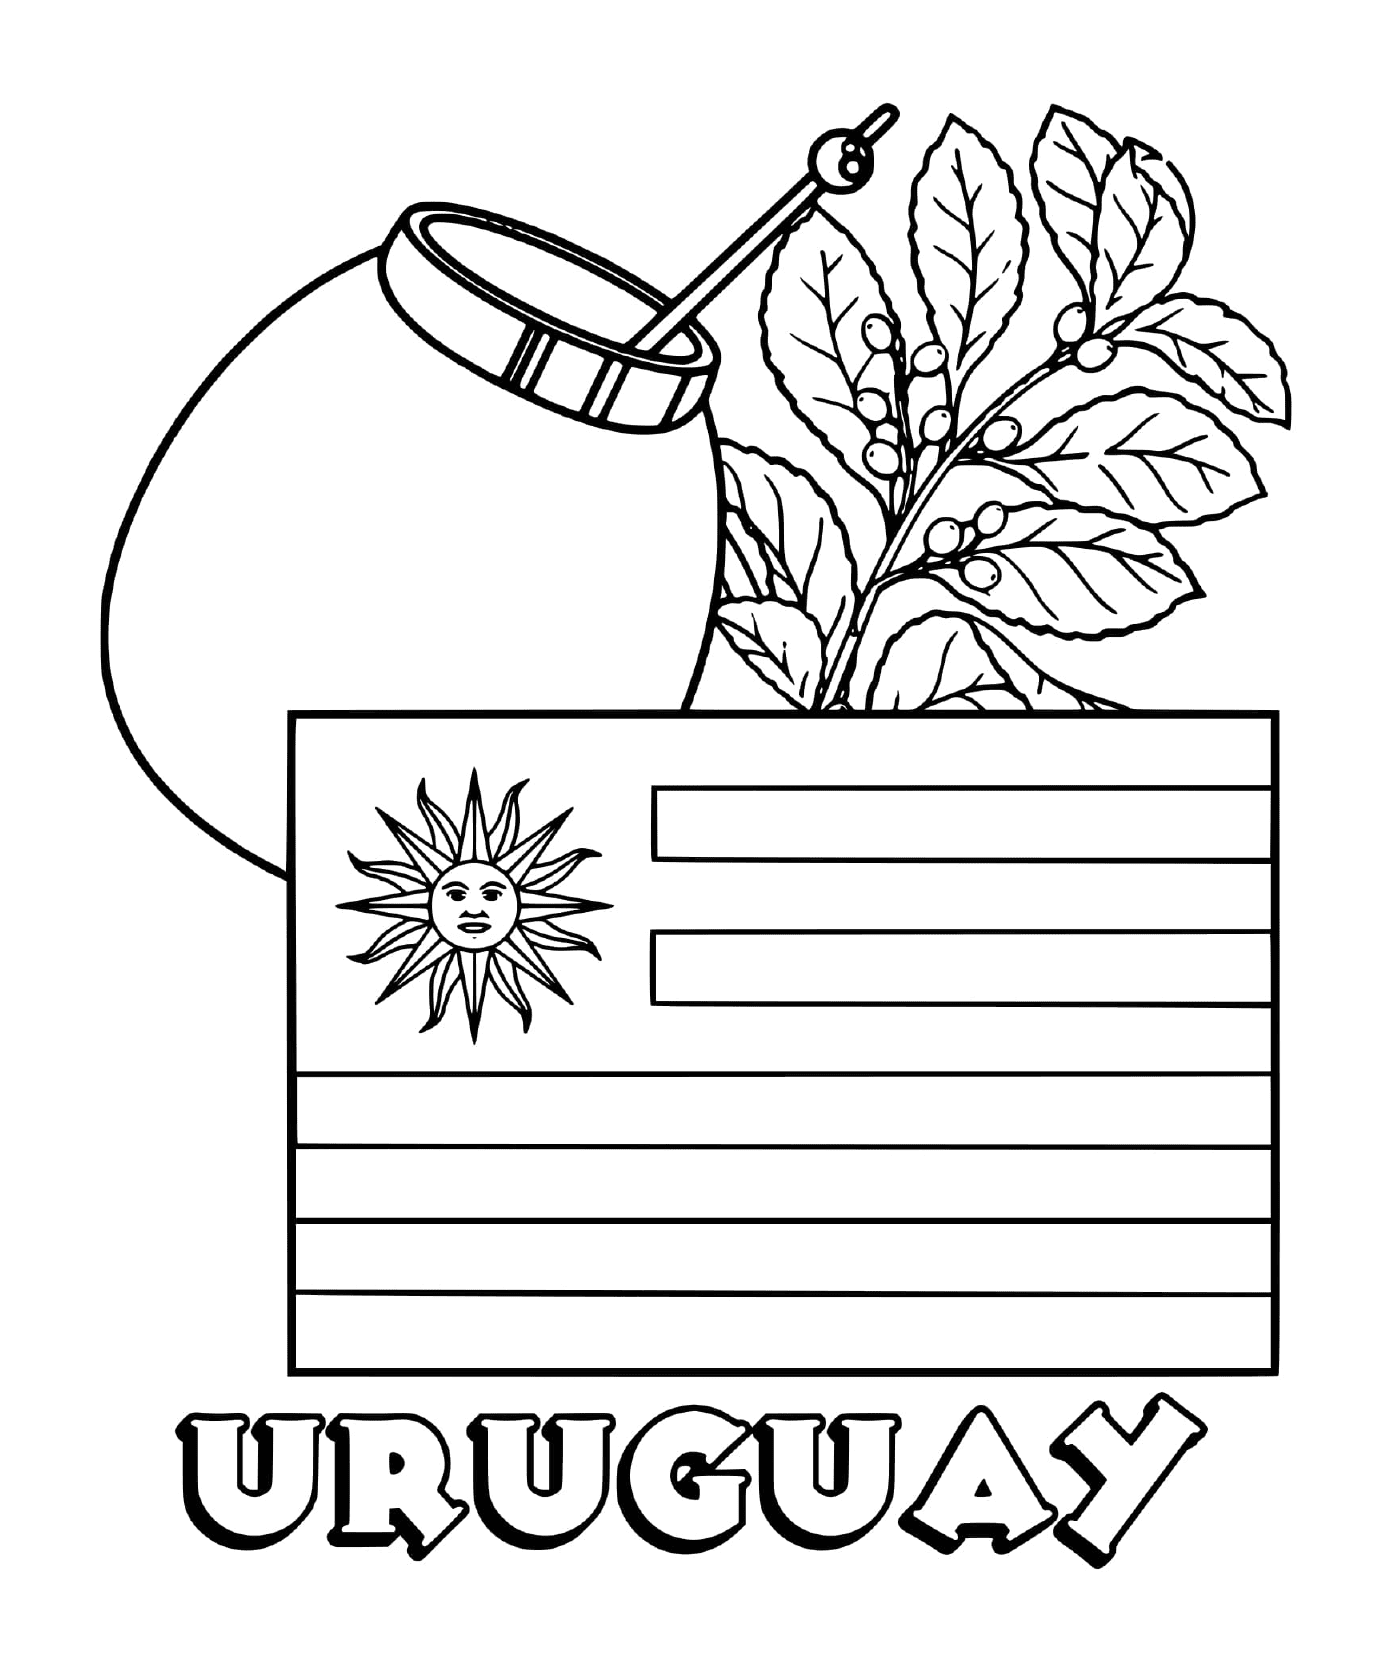  Bandiera uruguaiana, yesba matte 